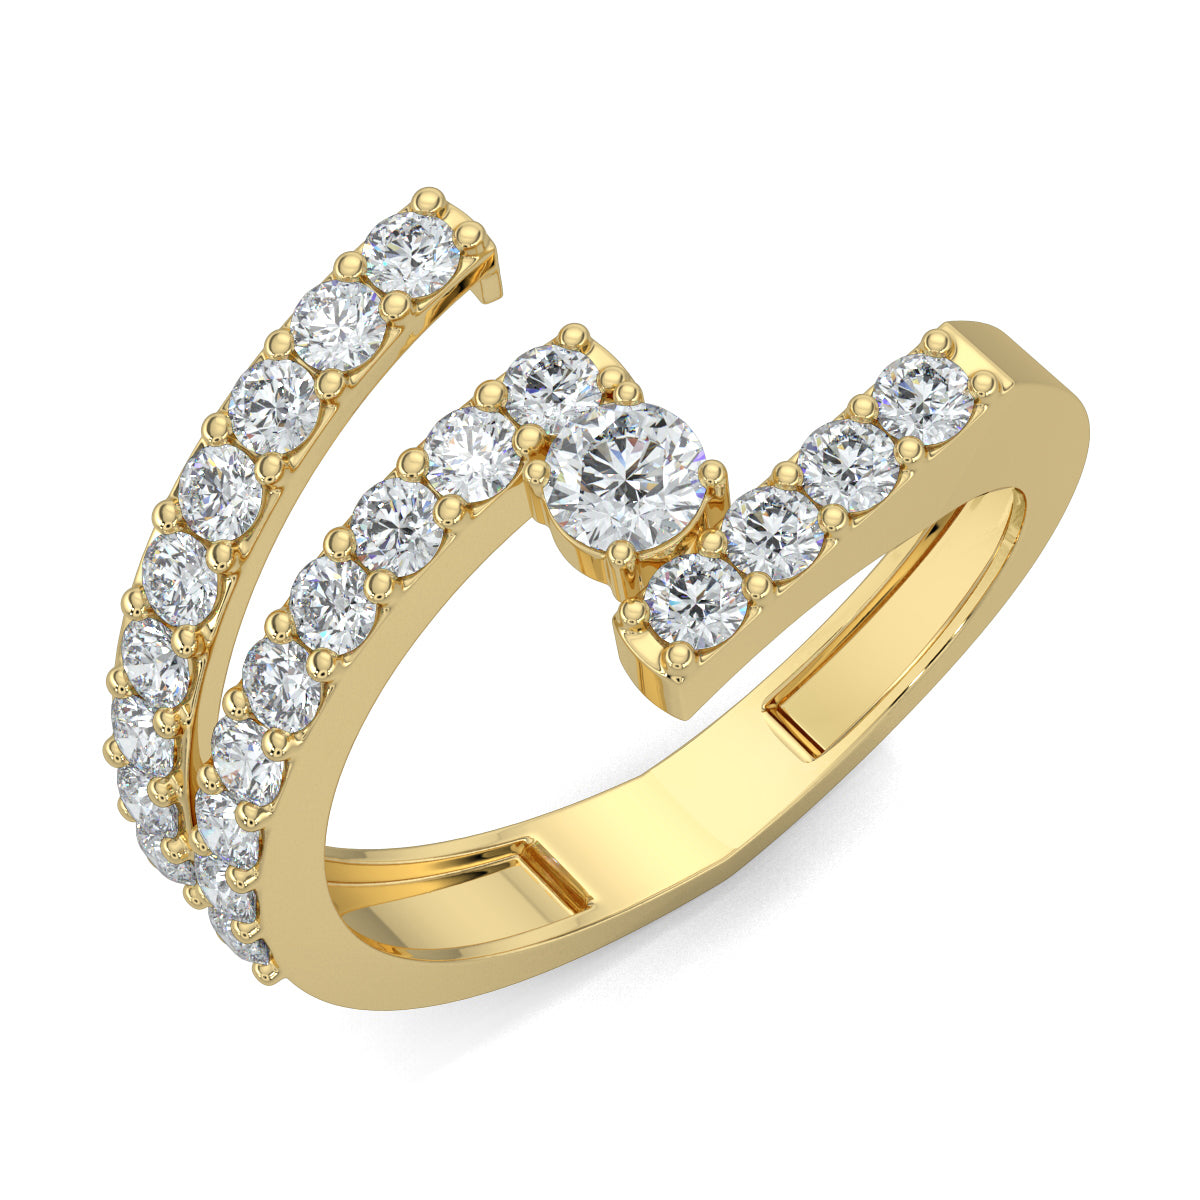 Yellow Gold, Diamond Ring, Sway Split Shank Diamond Ring, Natural Diamond Jewelry, Lab-Grown Diamond Jewelry, Everyday Diamond Ring, Round Diamond Band, Modern Luxury Ring